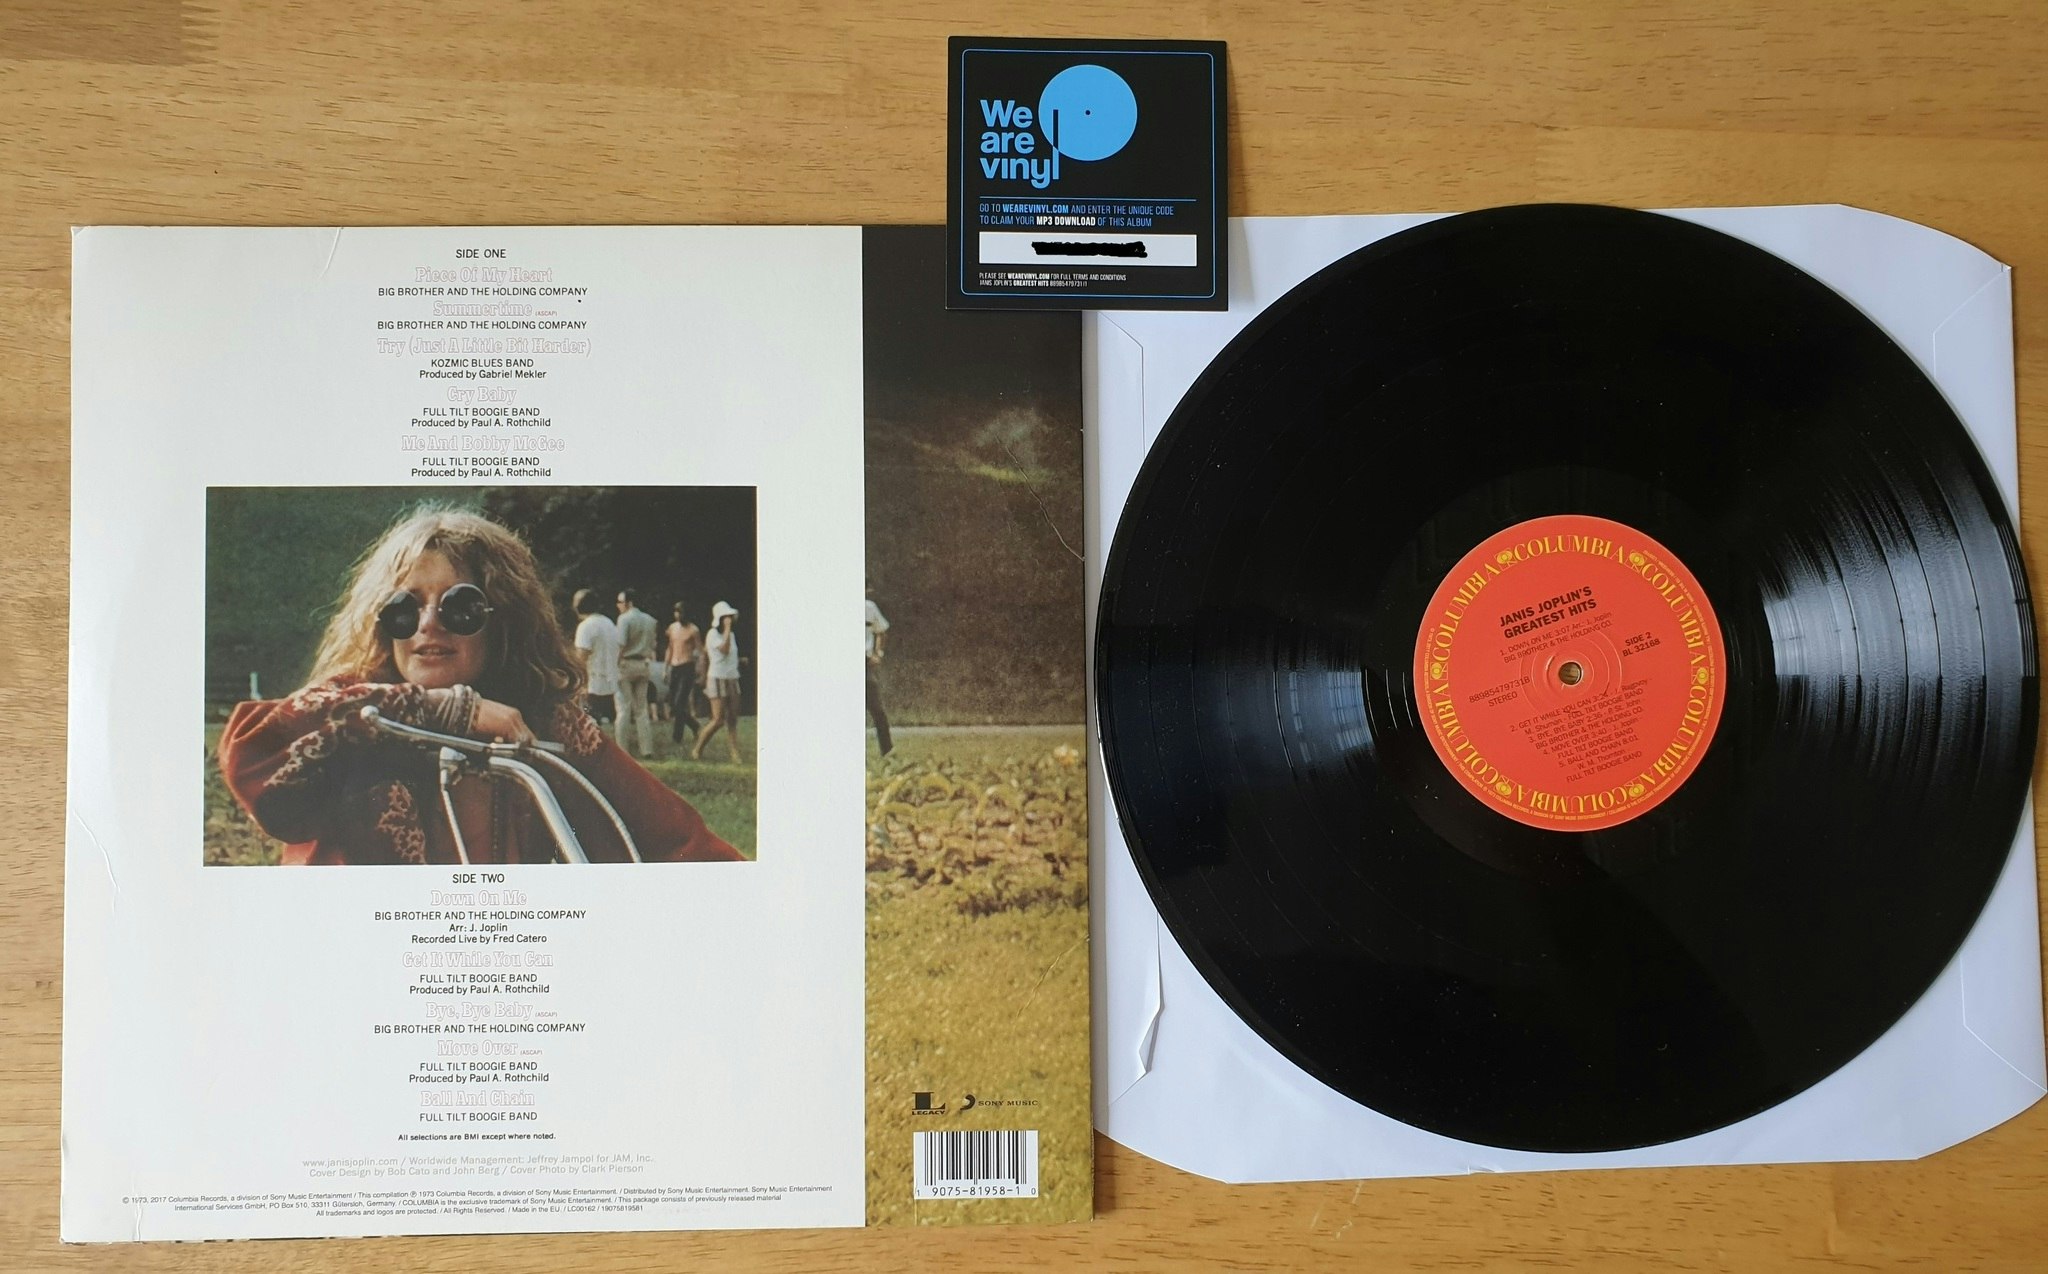 Janis Joplin, Greatest Hits (Mp4 Download included). Vinyl LP